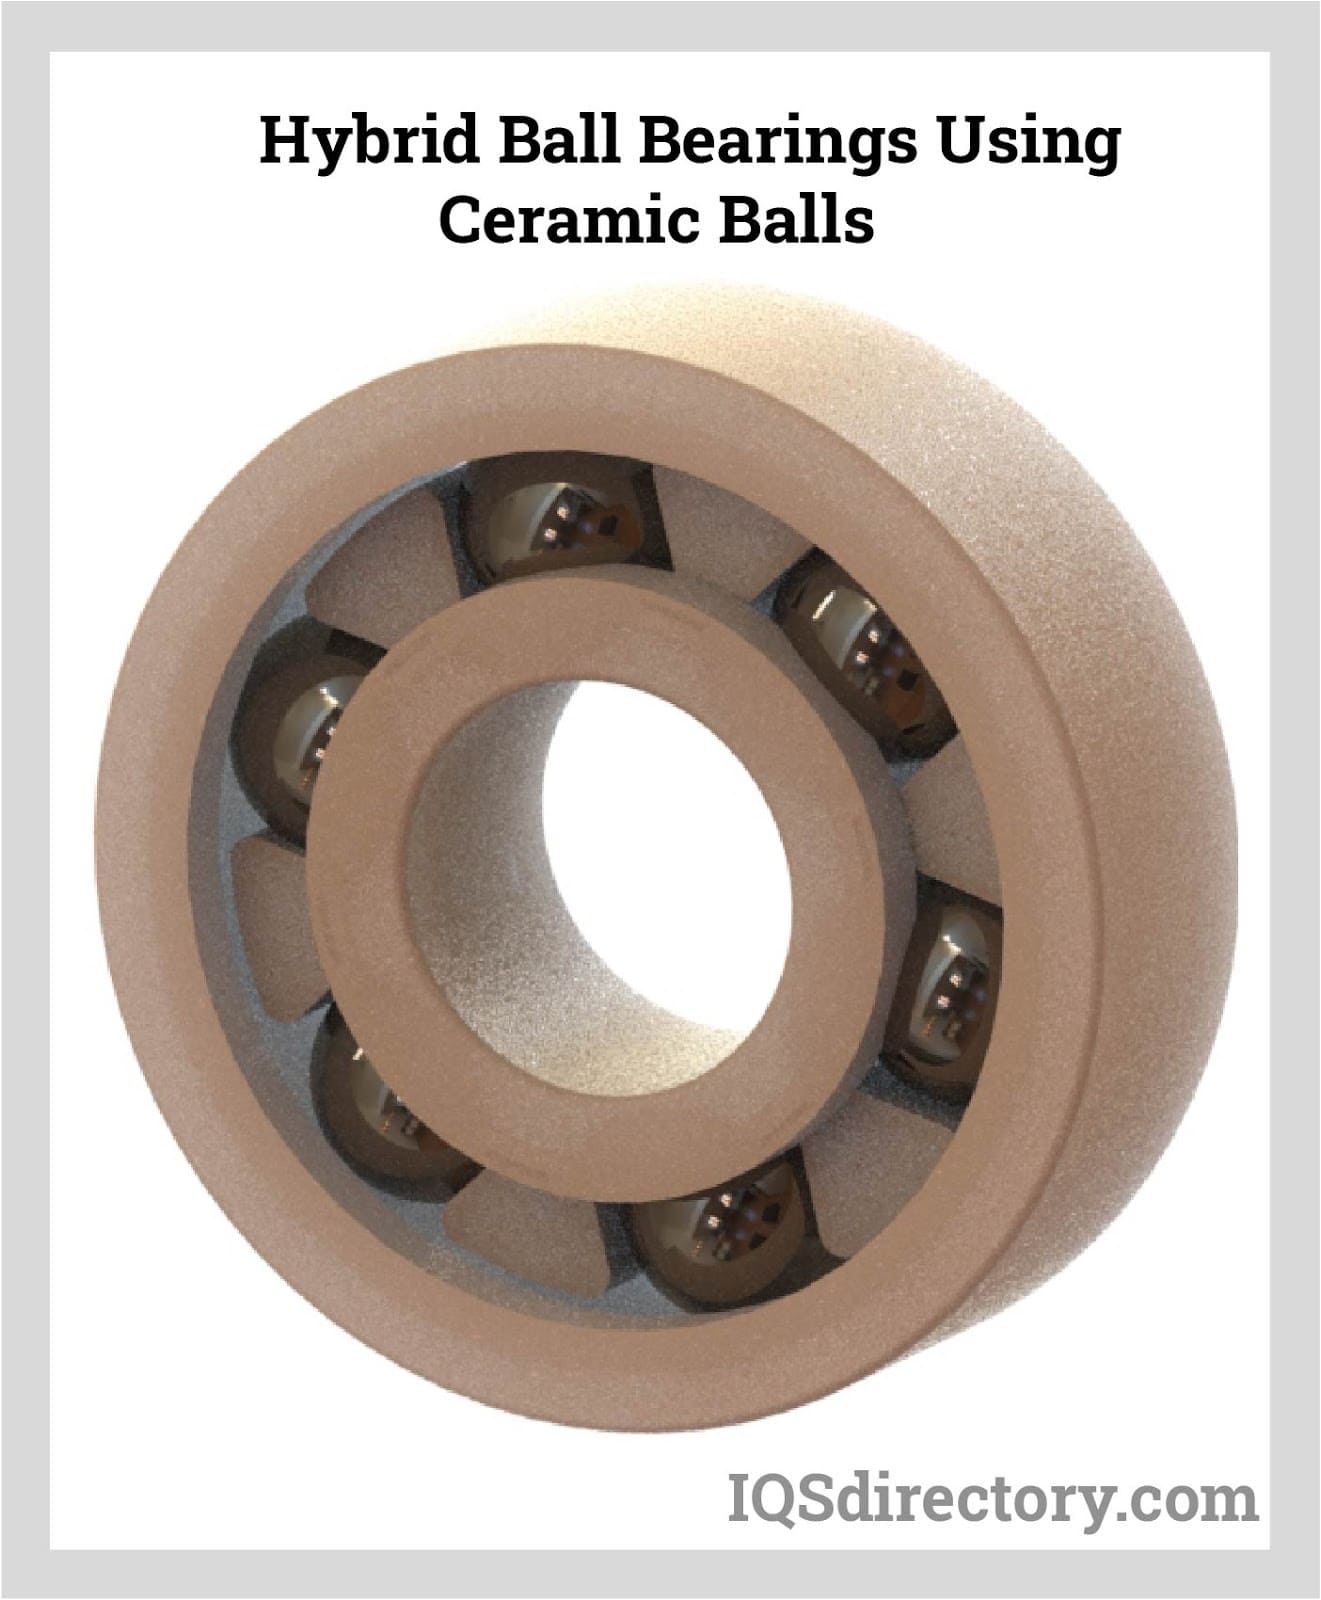 Hybrid Ball Bearings Using Ceramic Balls